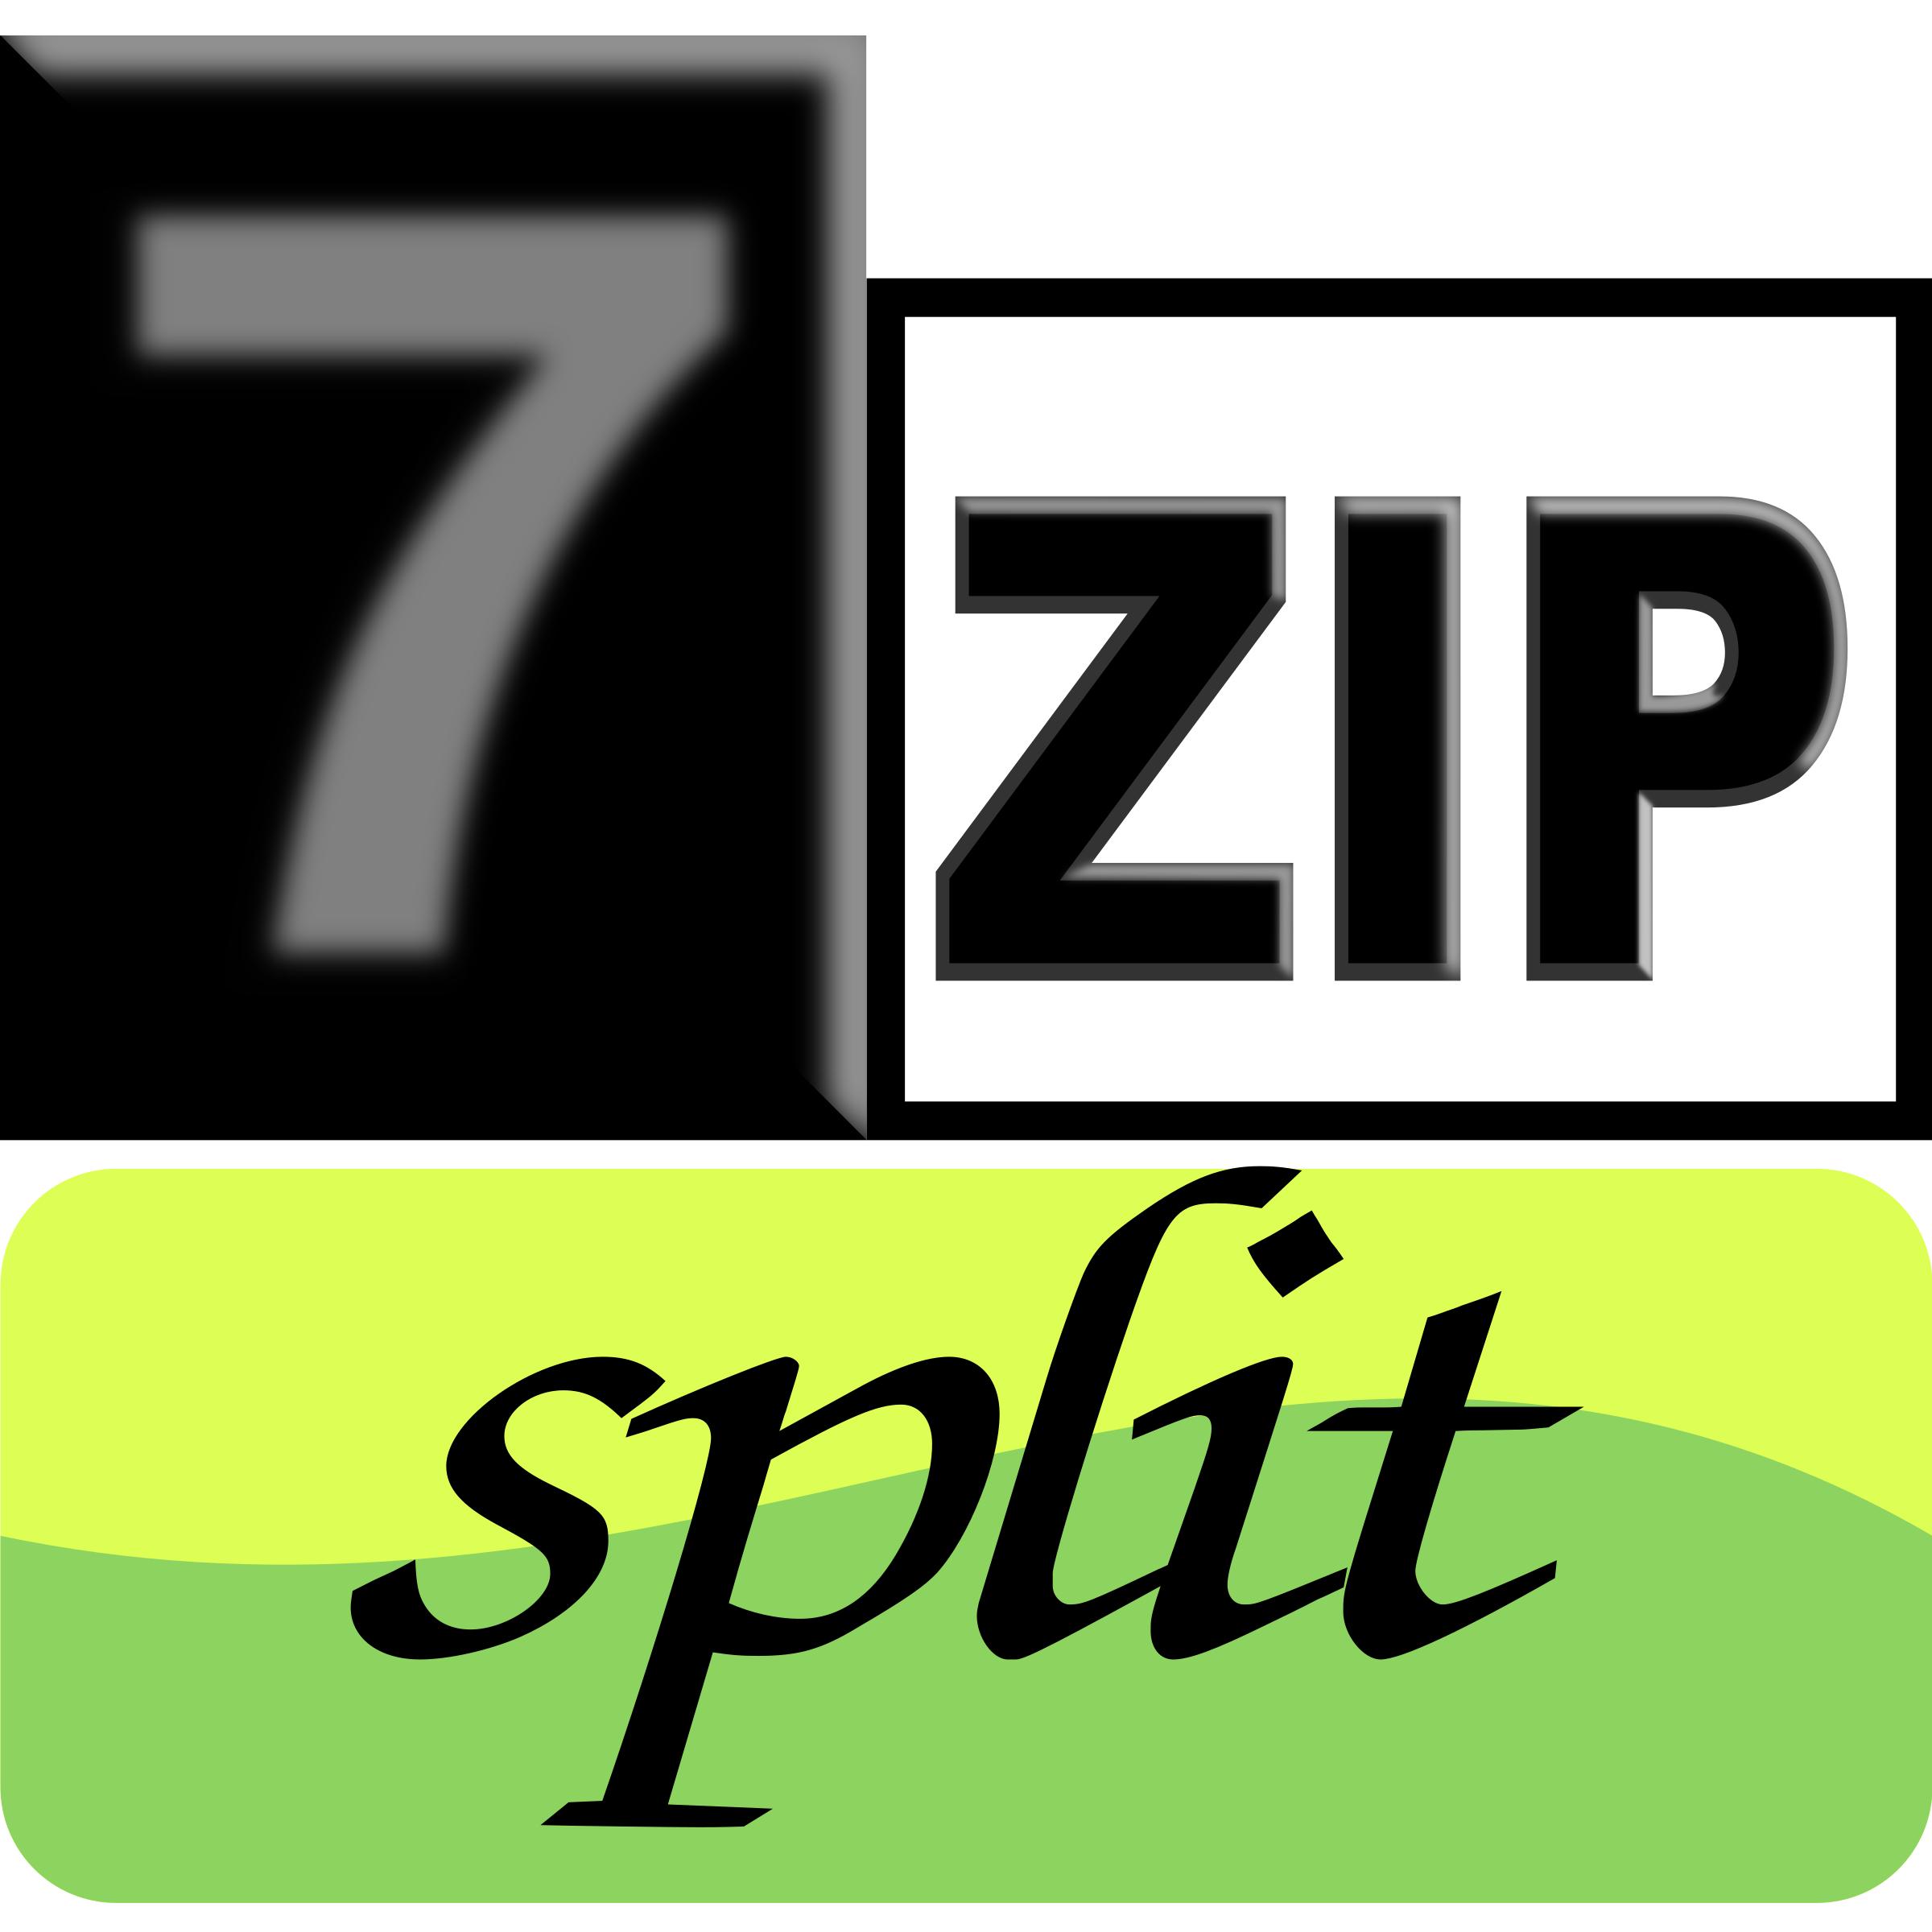 7zipClassic-split png